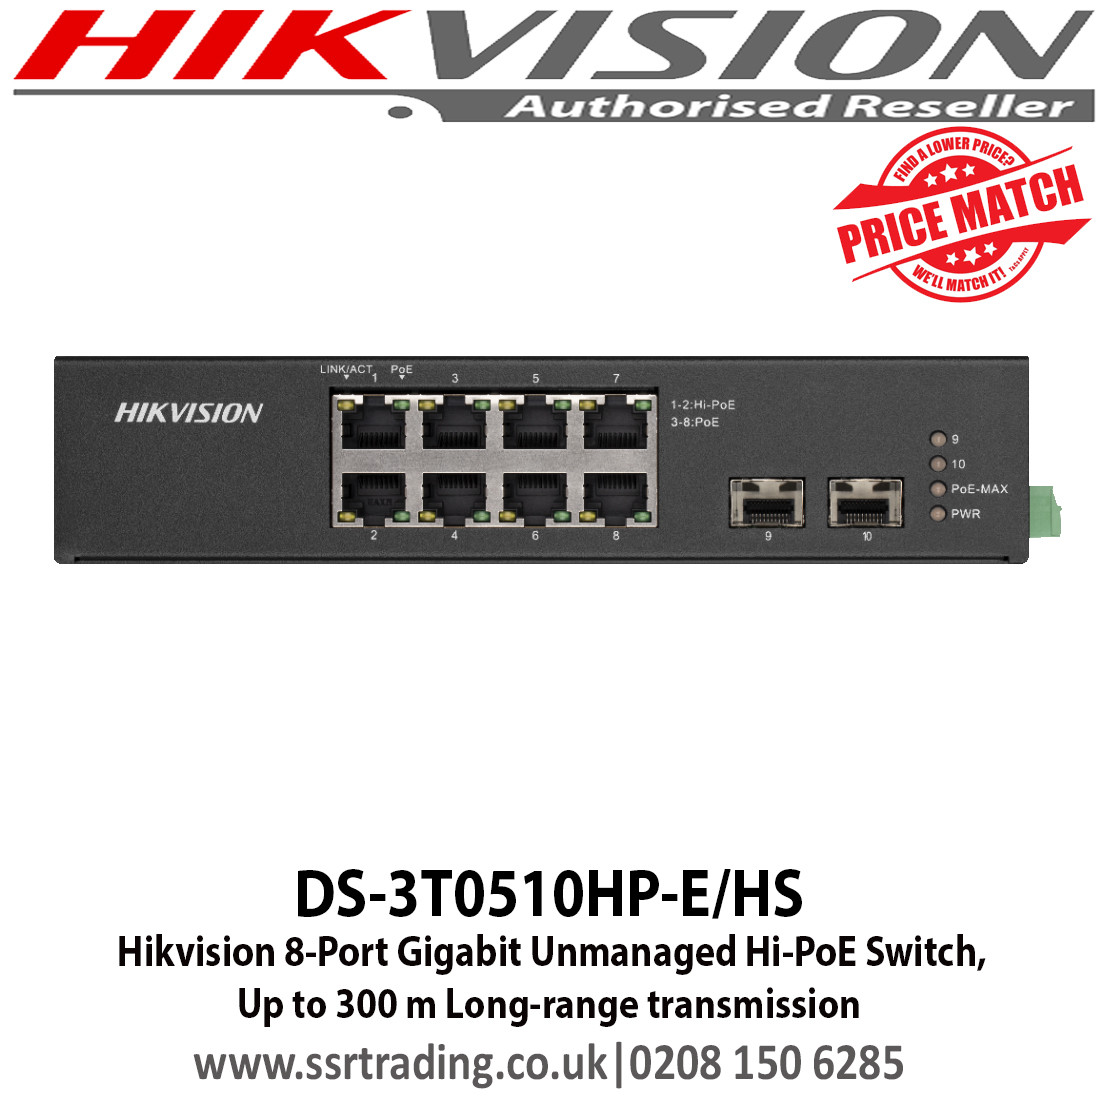 Hikvision 8-Port Gigabit Unmanaged Hi-PoE Switch, 6 KV surge protection for  PoE ports. PoE output power management, Up to 300 m long-range transmission  - DS-3T0510HP-E/HS